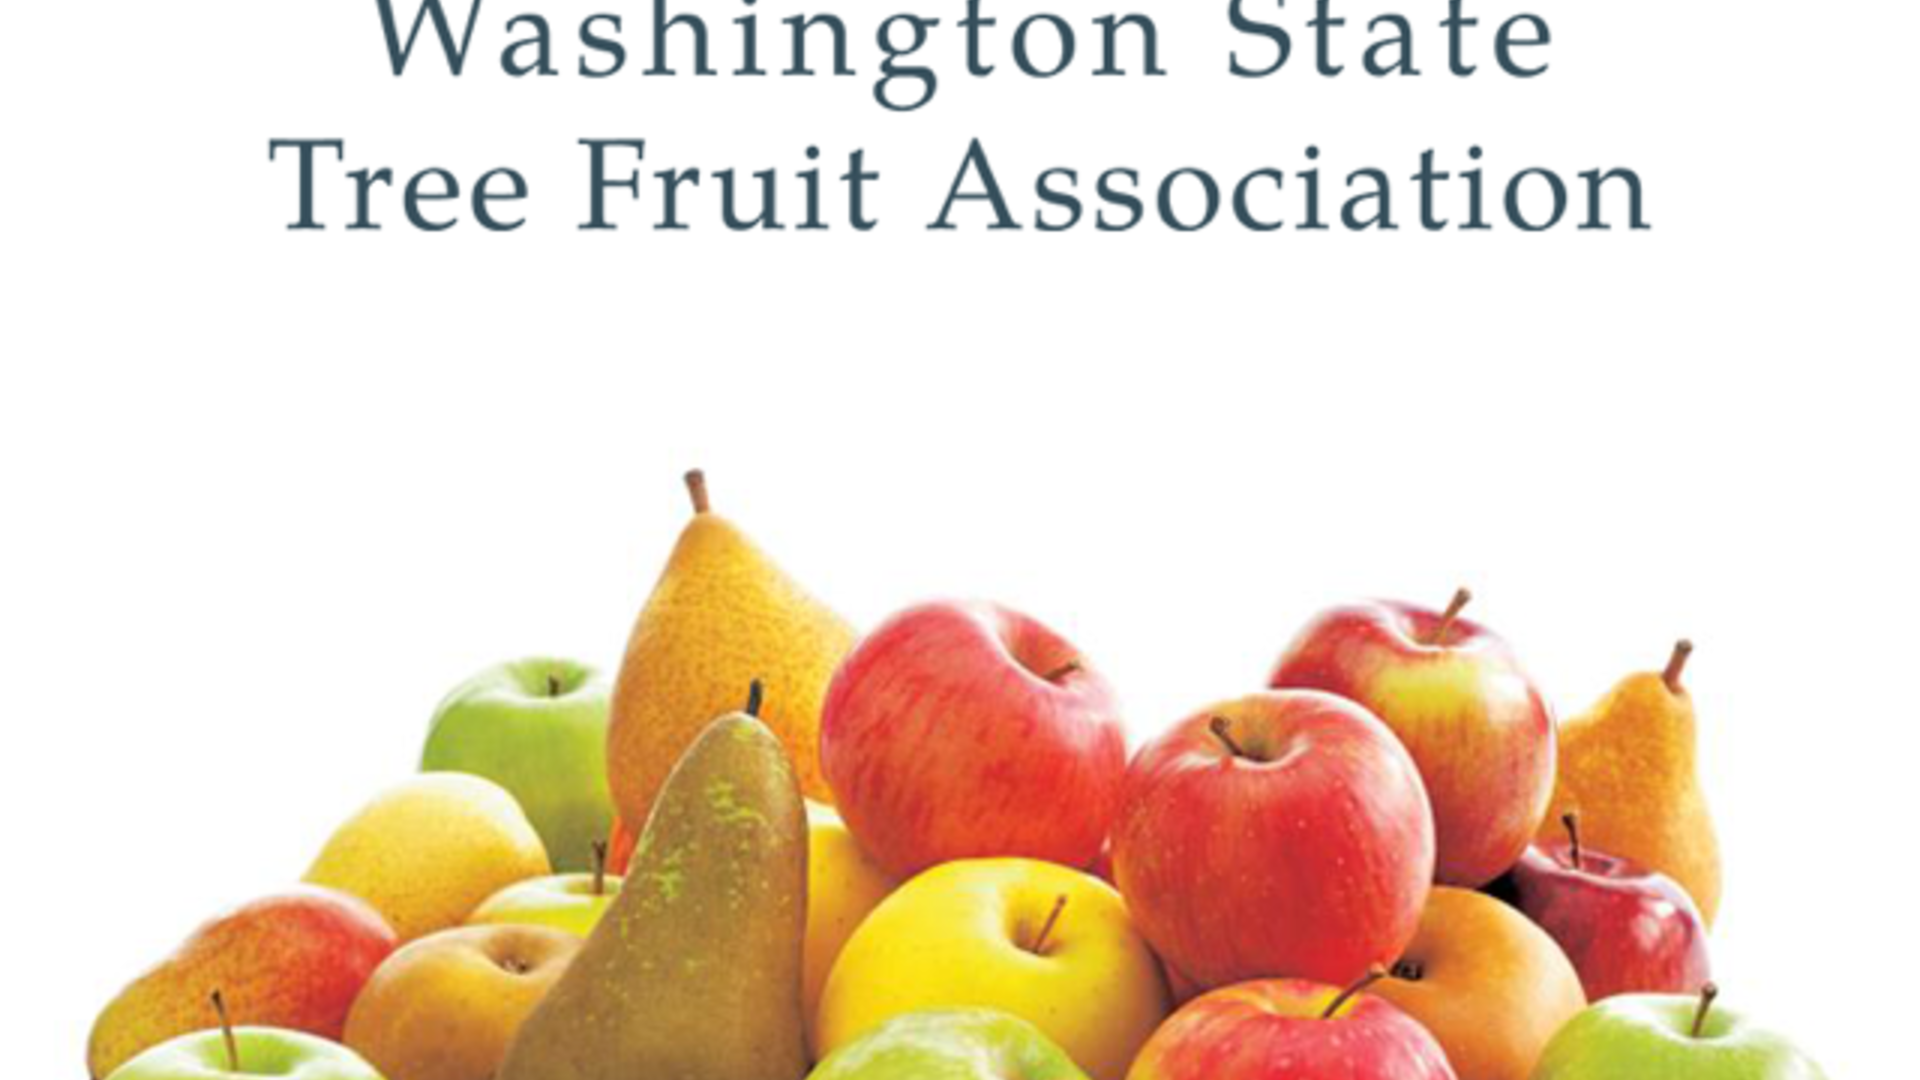 WA State Tree Fruit and Legislation Pt 2